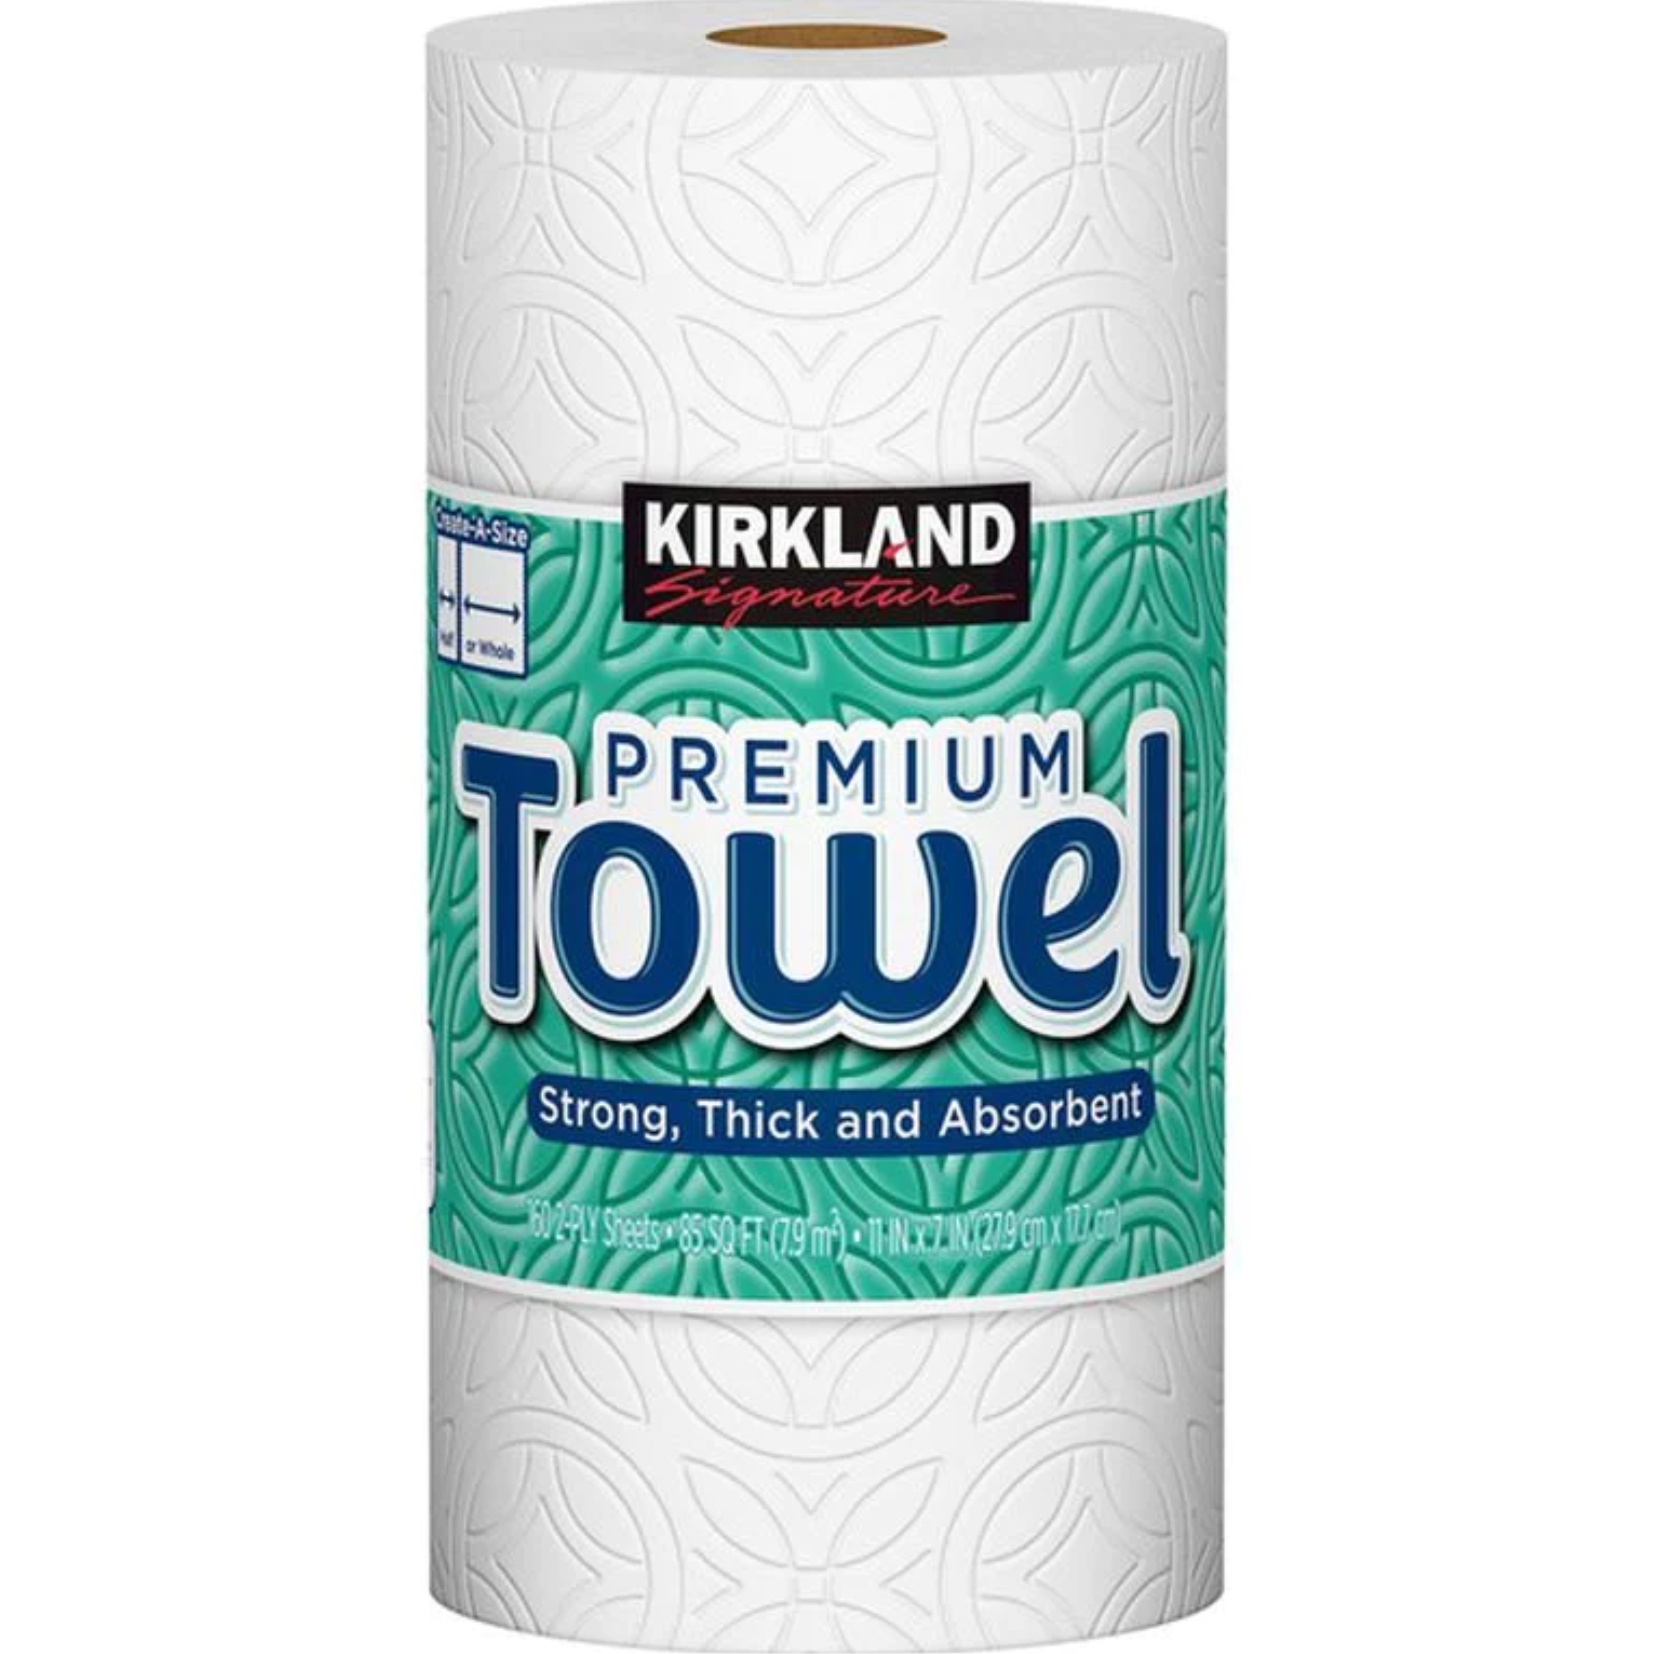 Kirkland 2-Ply 160 Sheet Paper Towel Roll